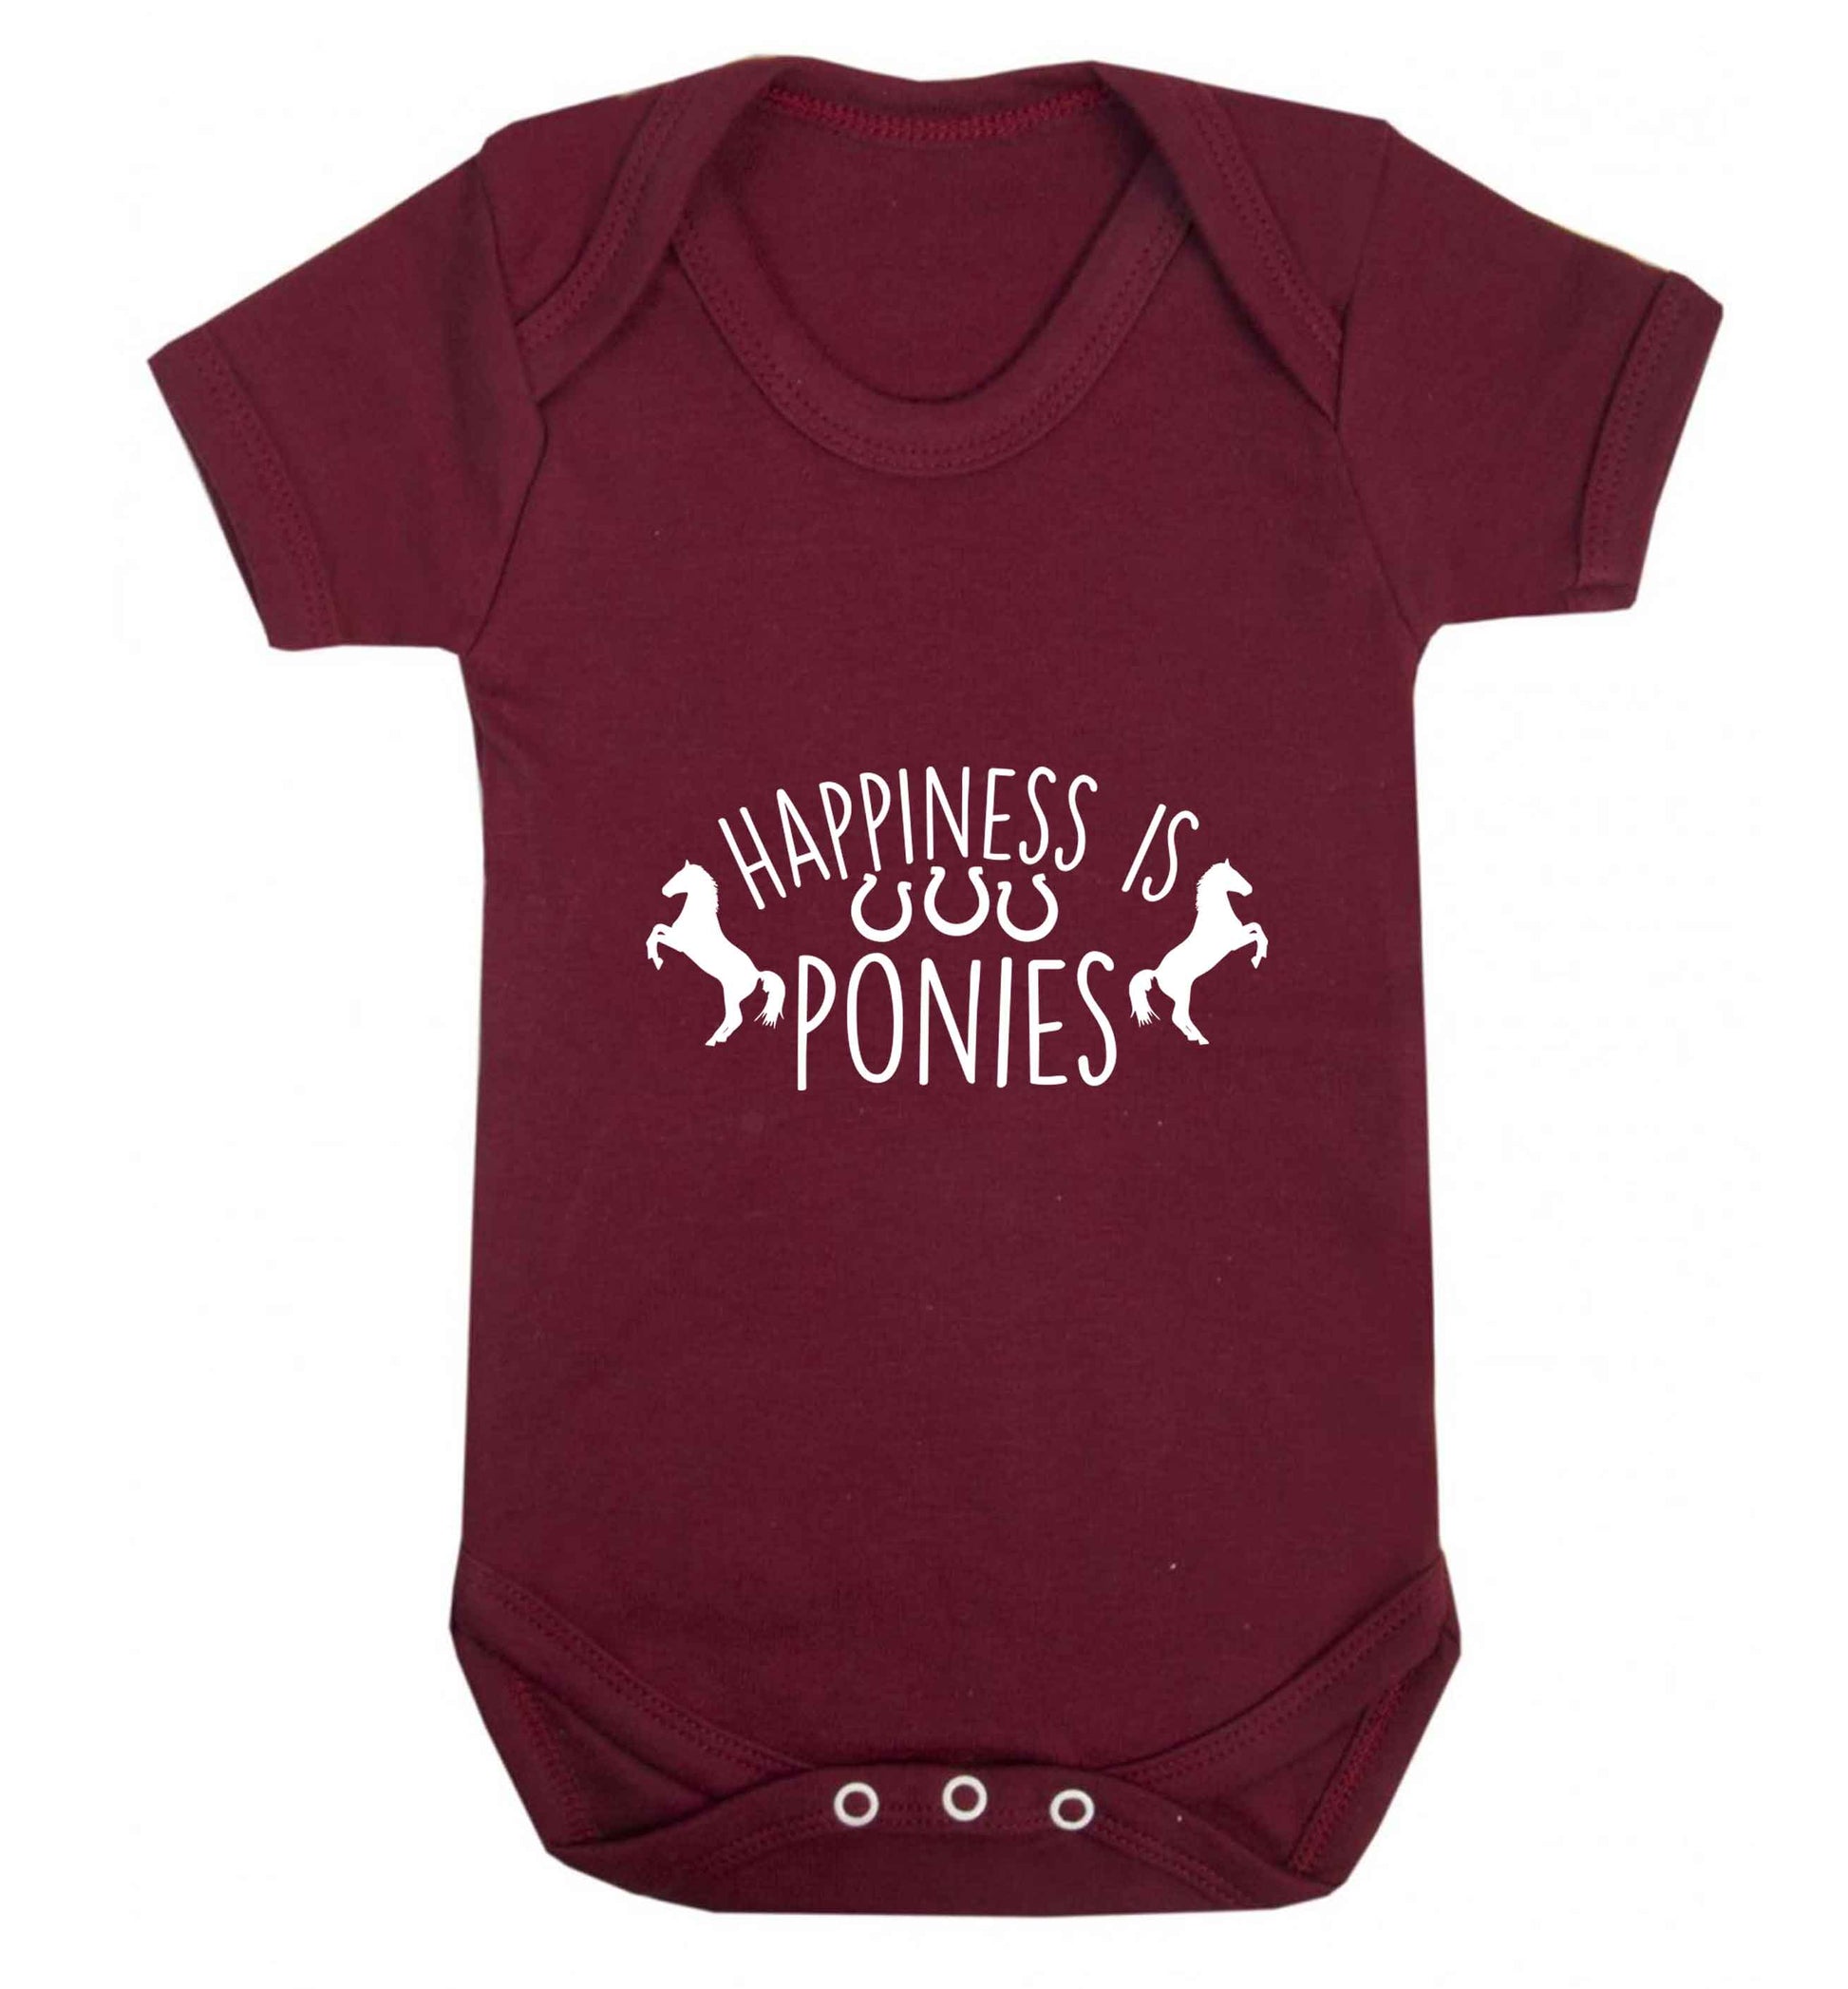 Happiness is ponies baby vest maroon 18-24 months